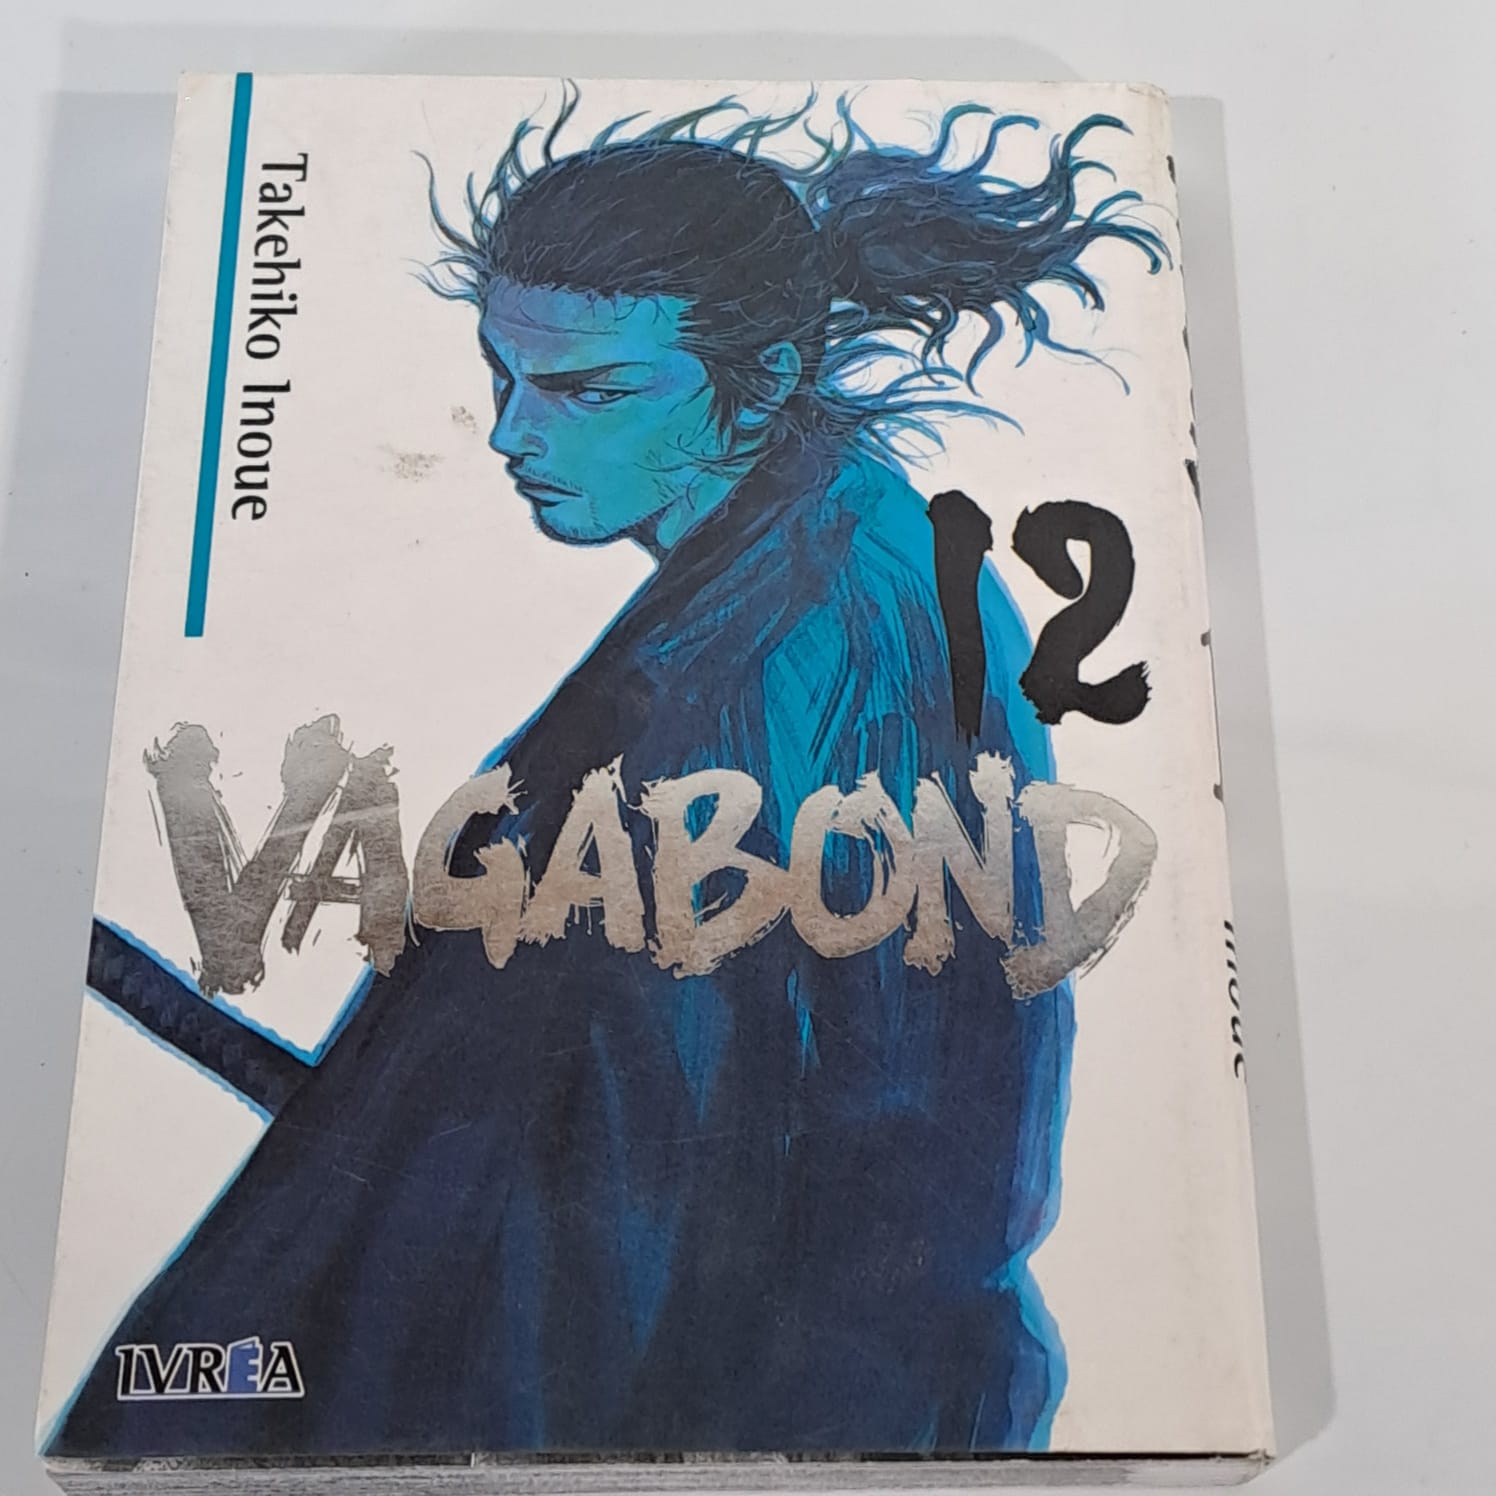 Vagabond 12 [Open box] [Wl]